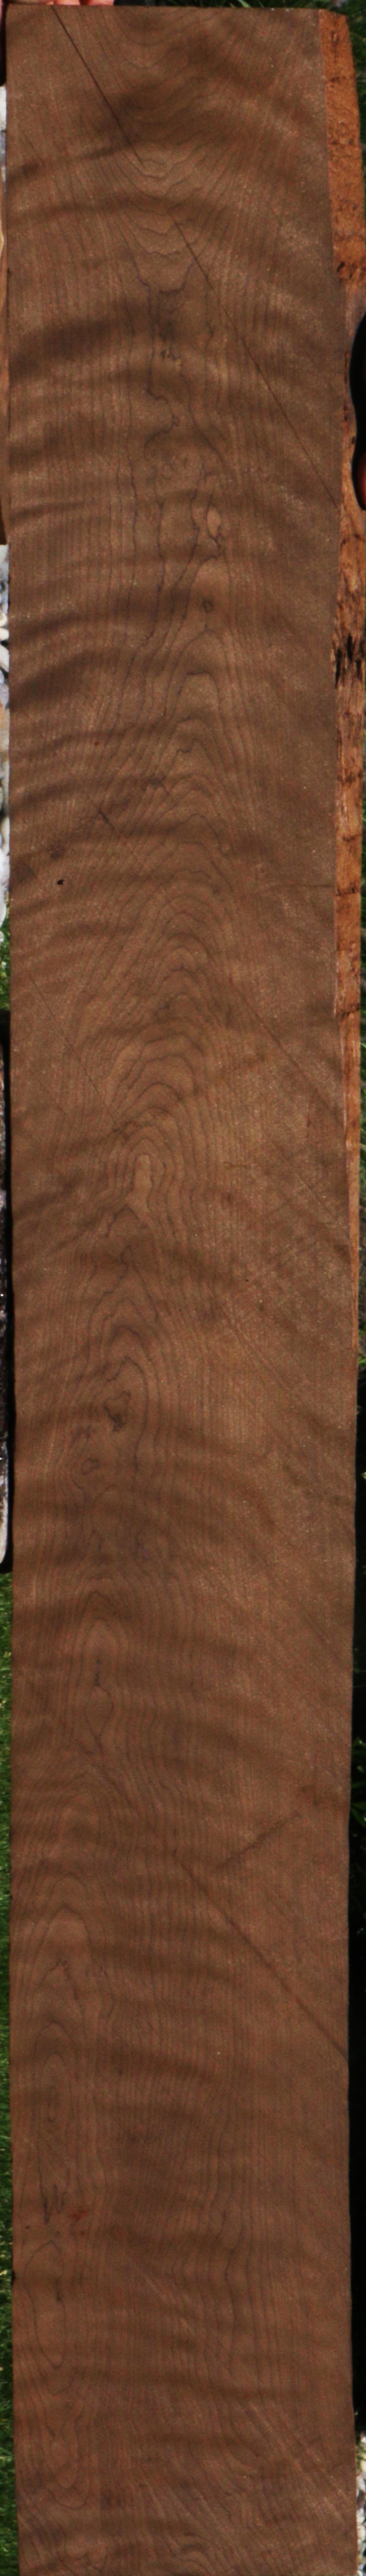 Extra Fancy Baked Birch Lumber